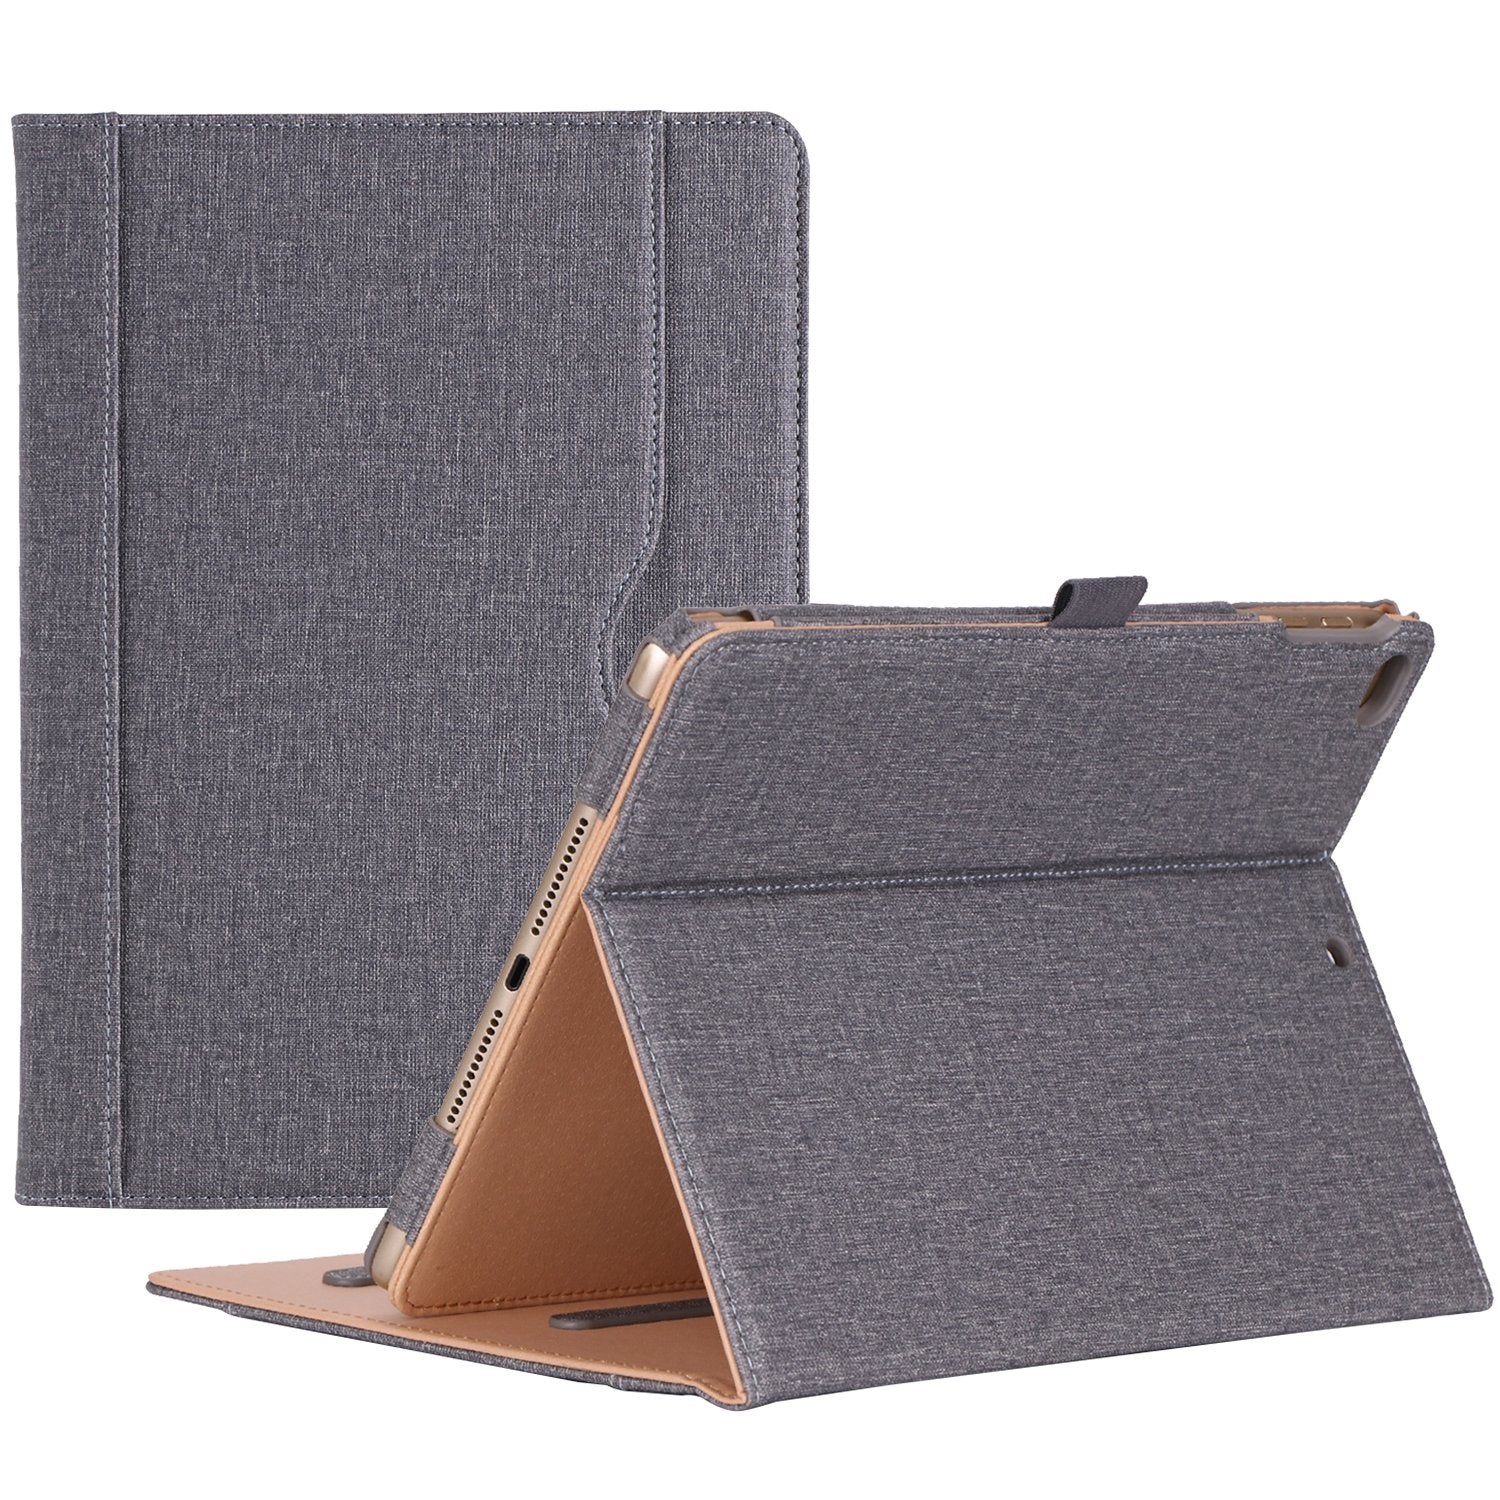 iPad 9.7 2018/2017 Leather Folio Case | ProCase grey